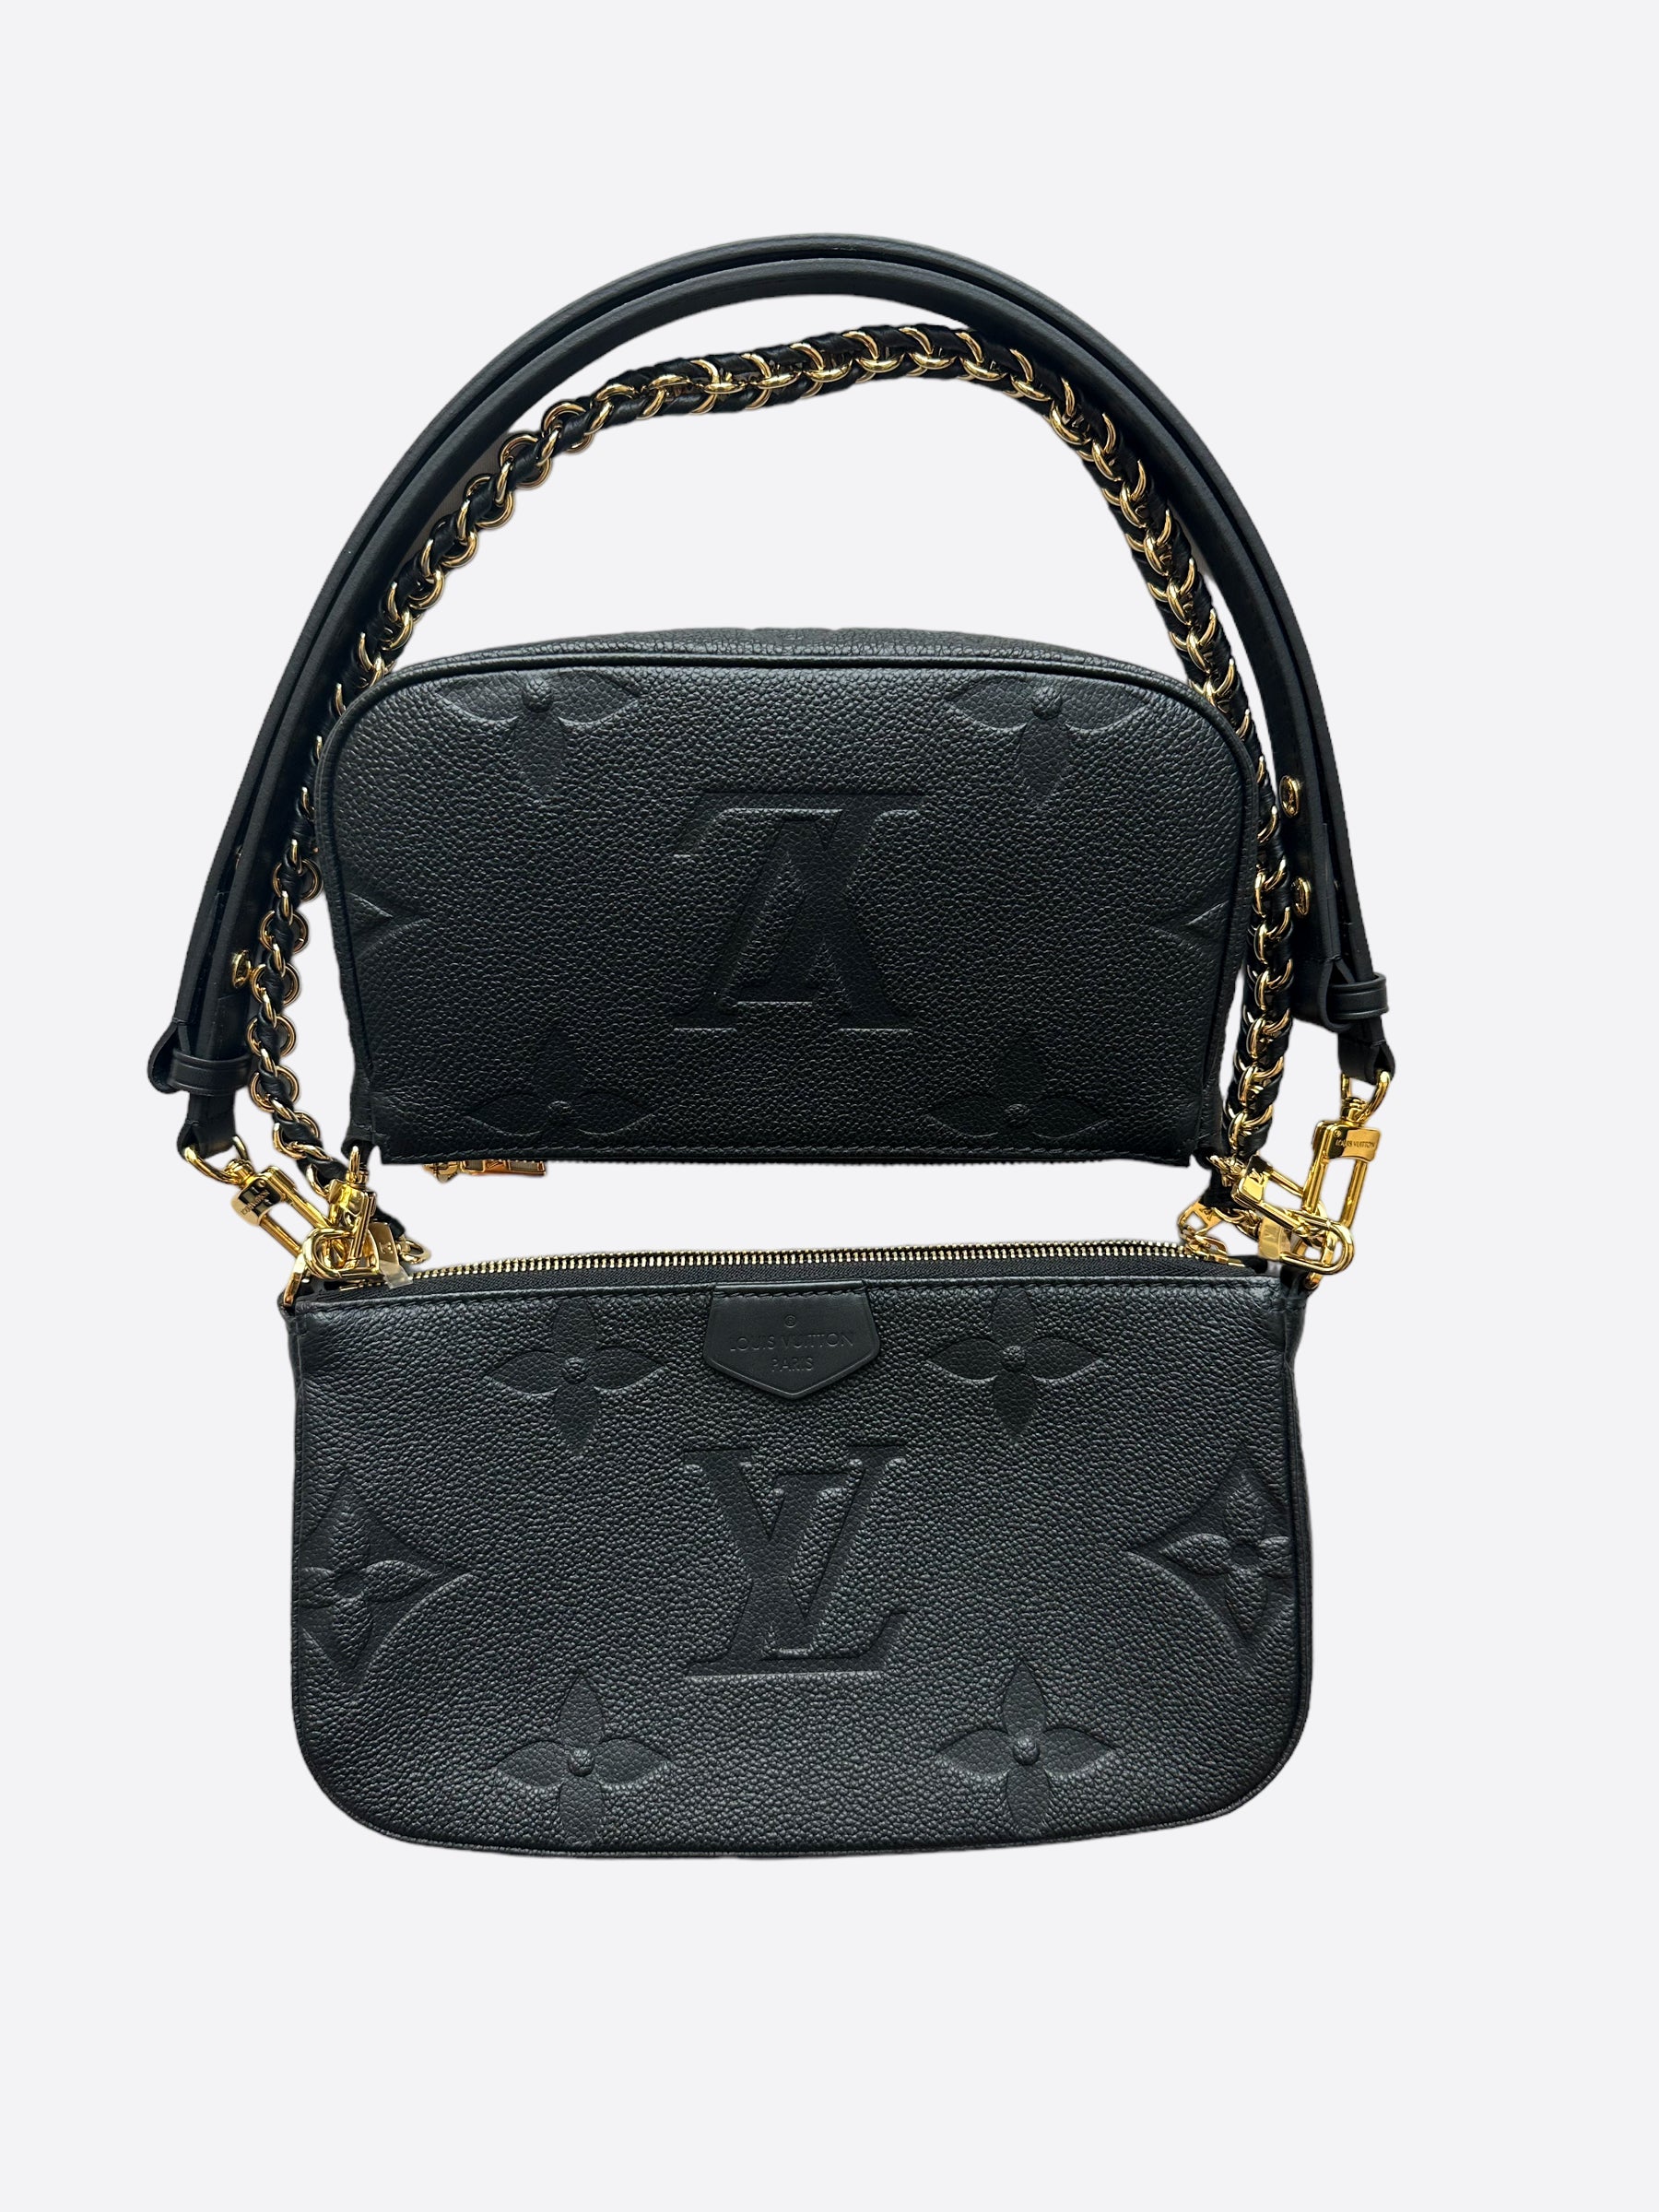 Louis Vuitton Multi Pochette, Black Empreinte Leather, Gold Hardware, New  in Box